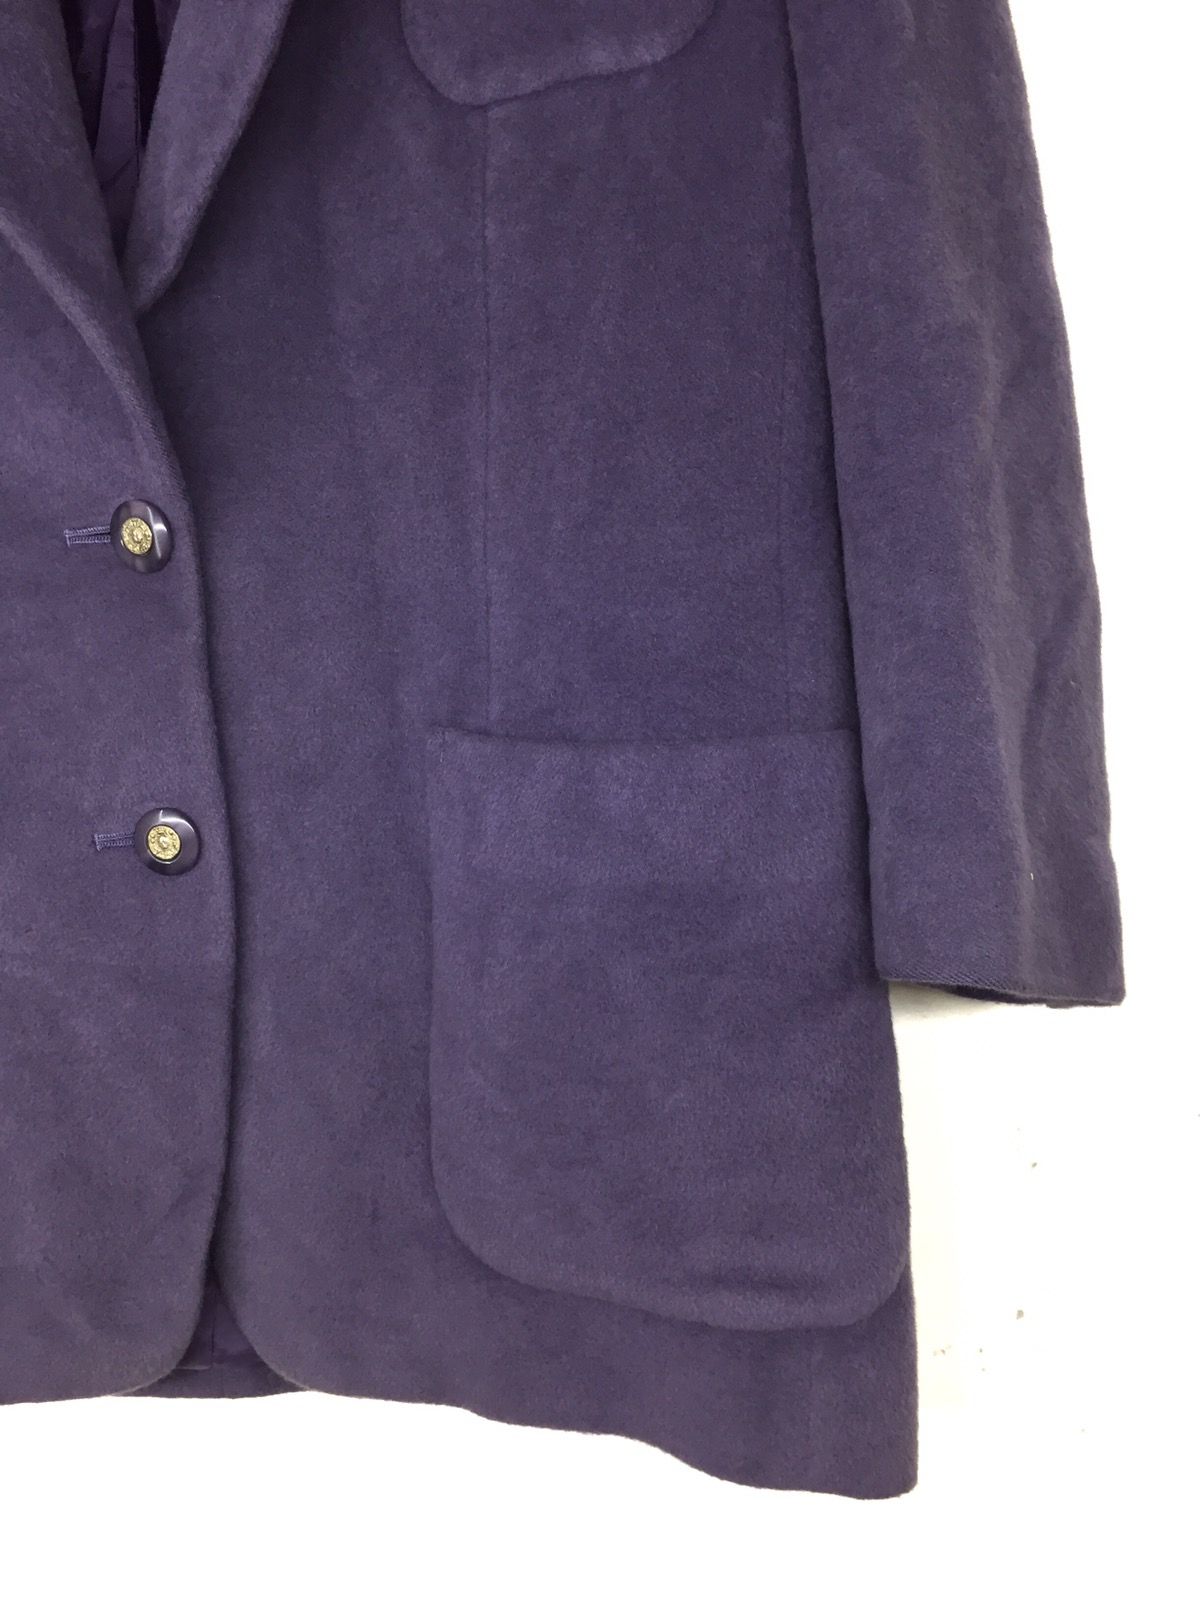 Vintage Pierre Balmain Velvet Jacket - 5